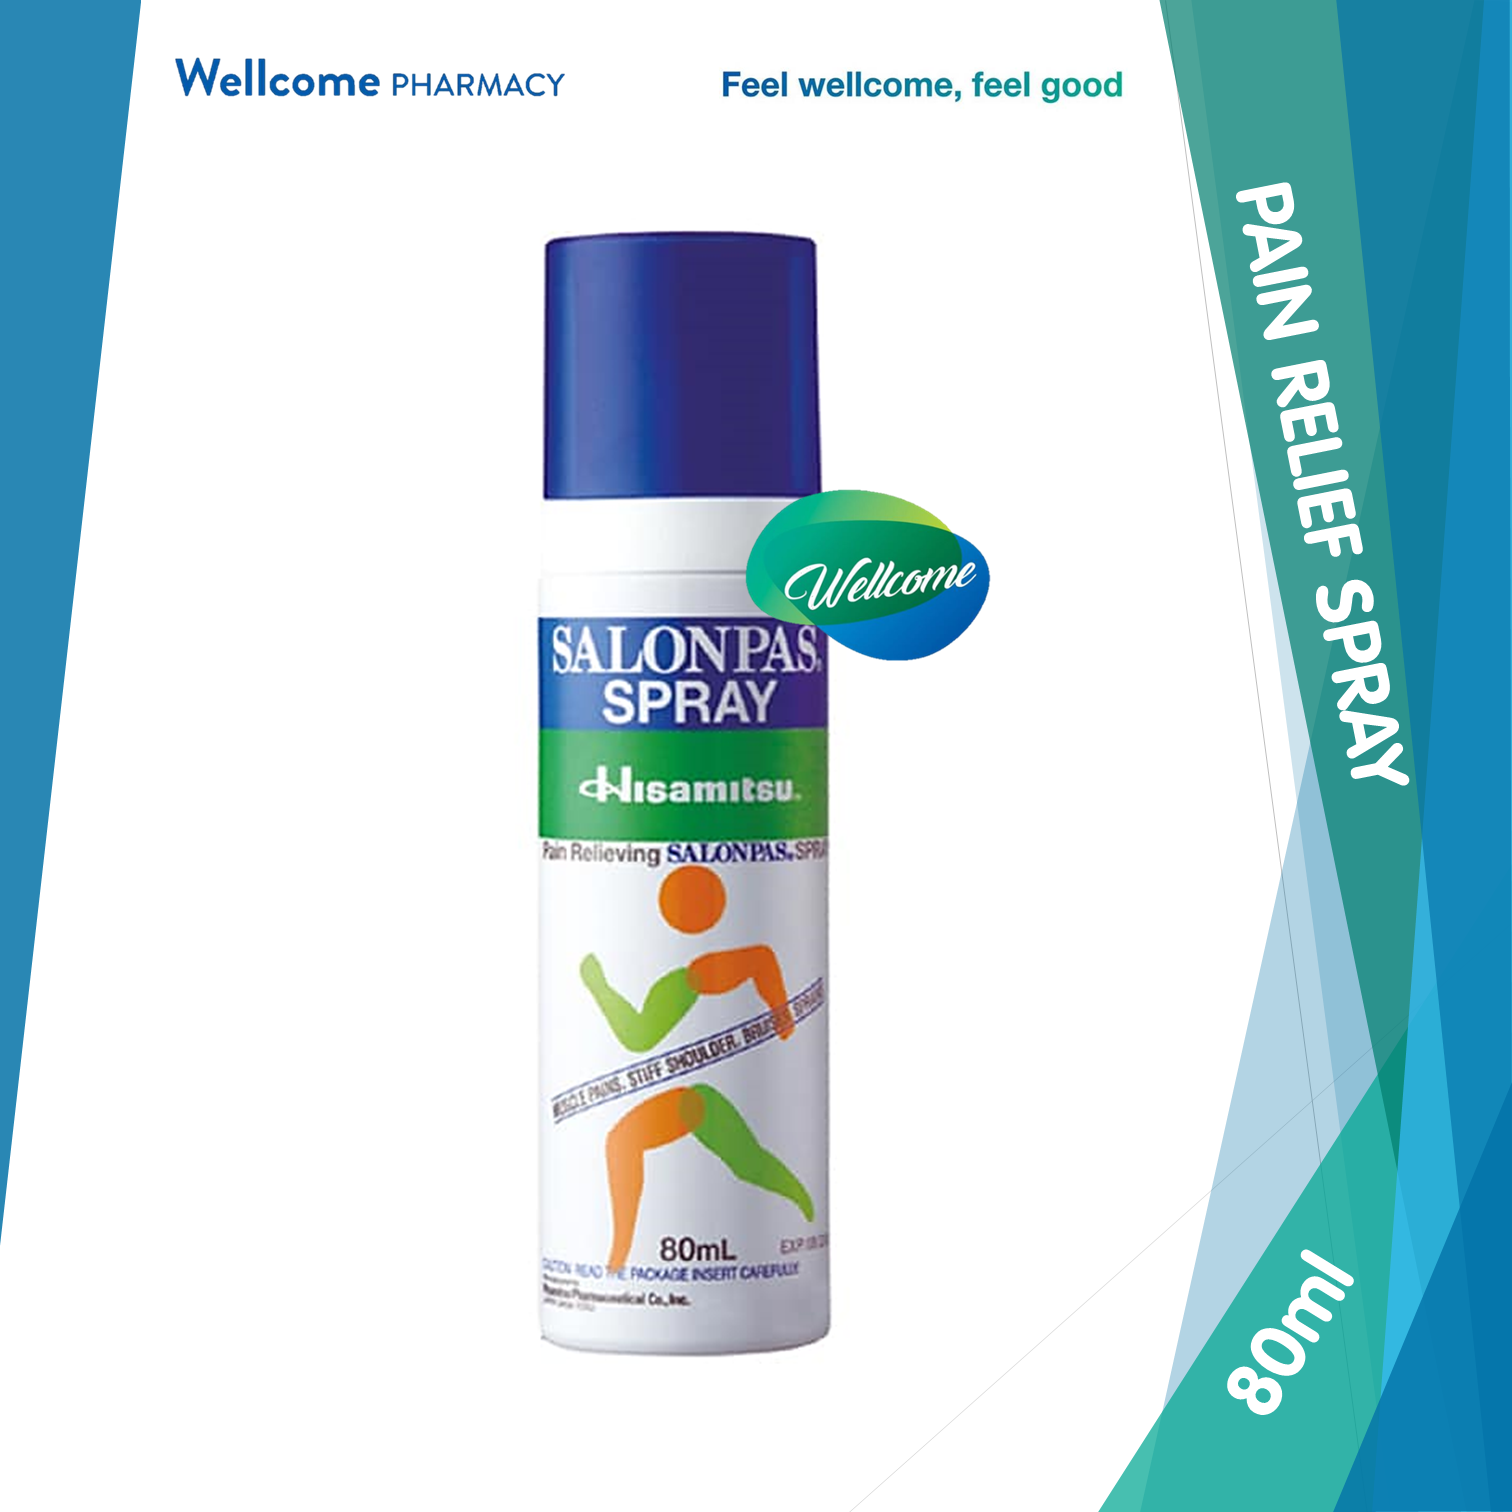 Salonpas Spray - 80ml - Wellcome Pharmacy